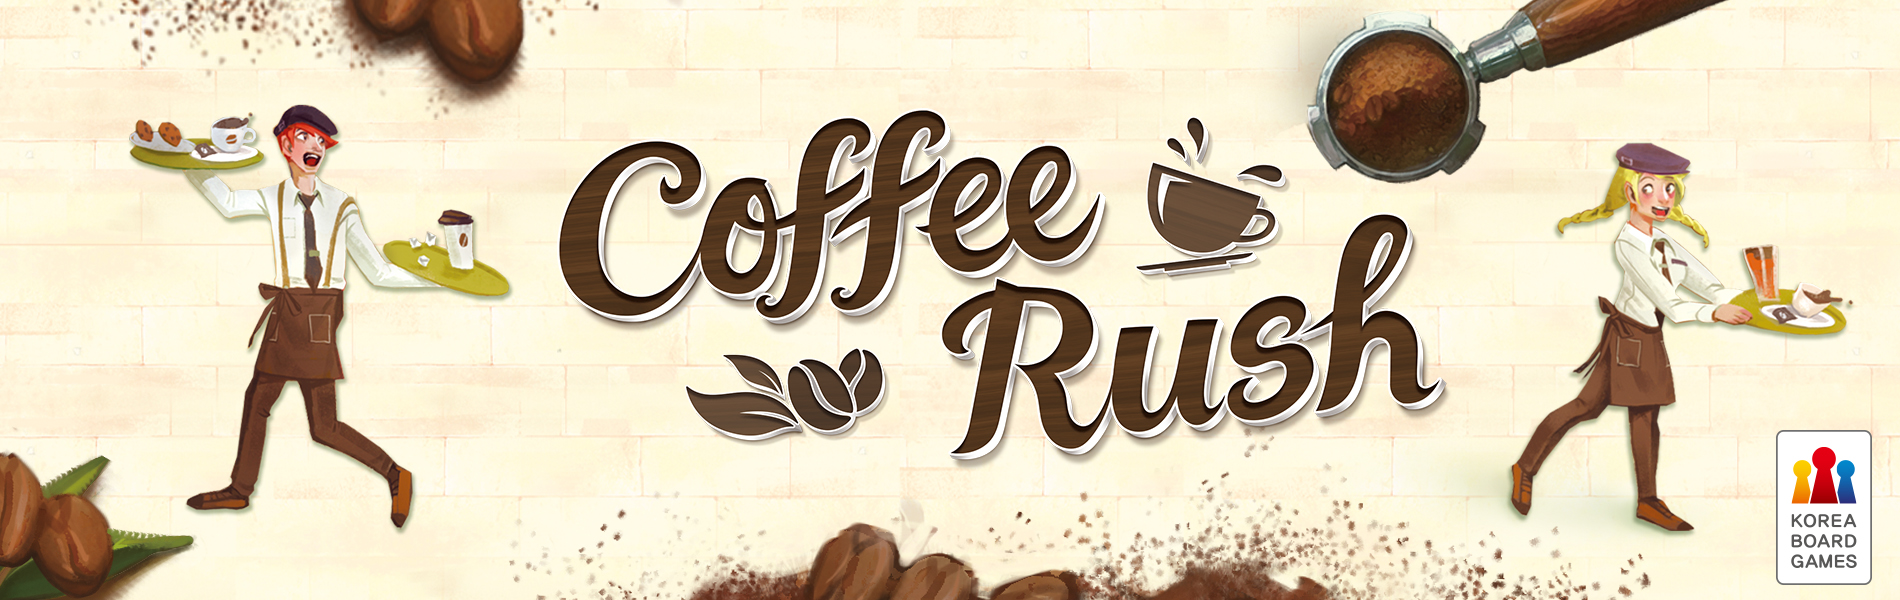 Coffee Rush - 12 janvier